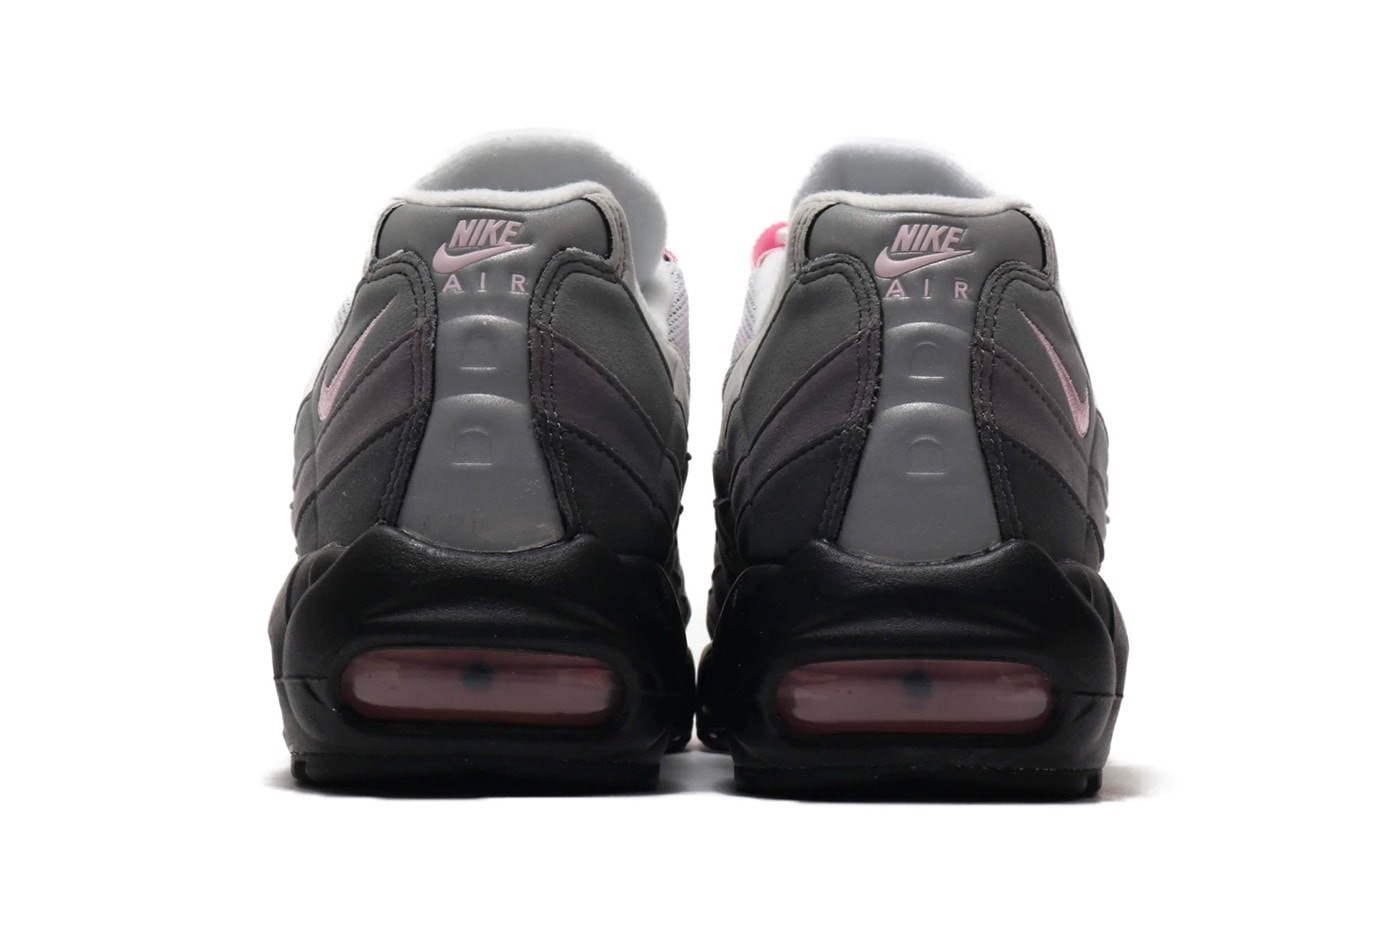 Nike Air Max 95 “Gunsmoke/Pink Foam” Release